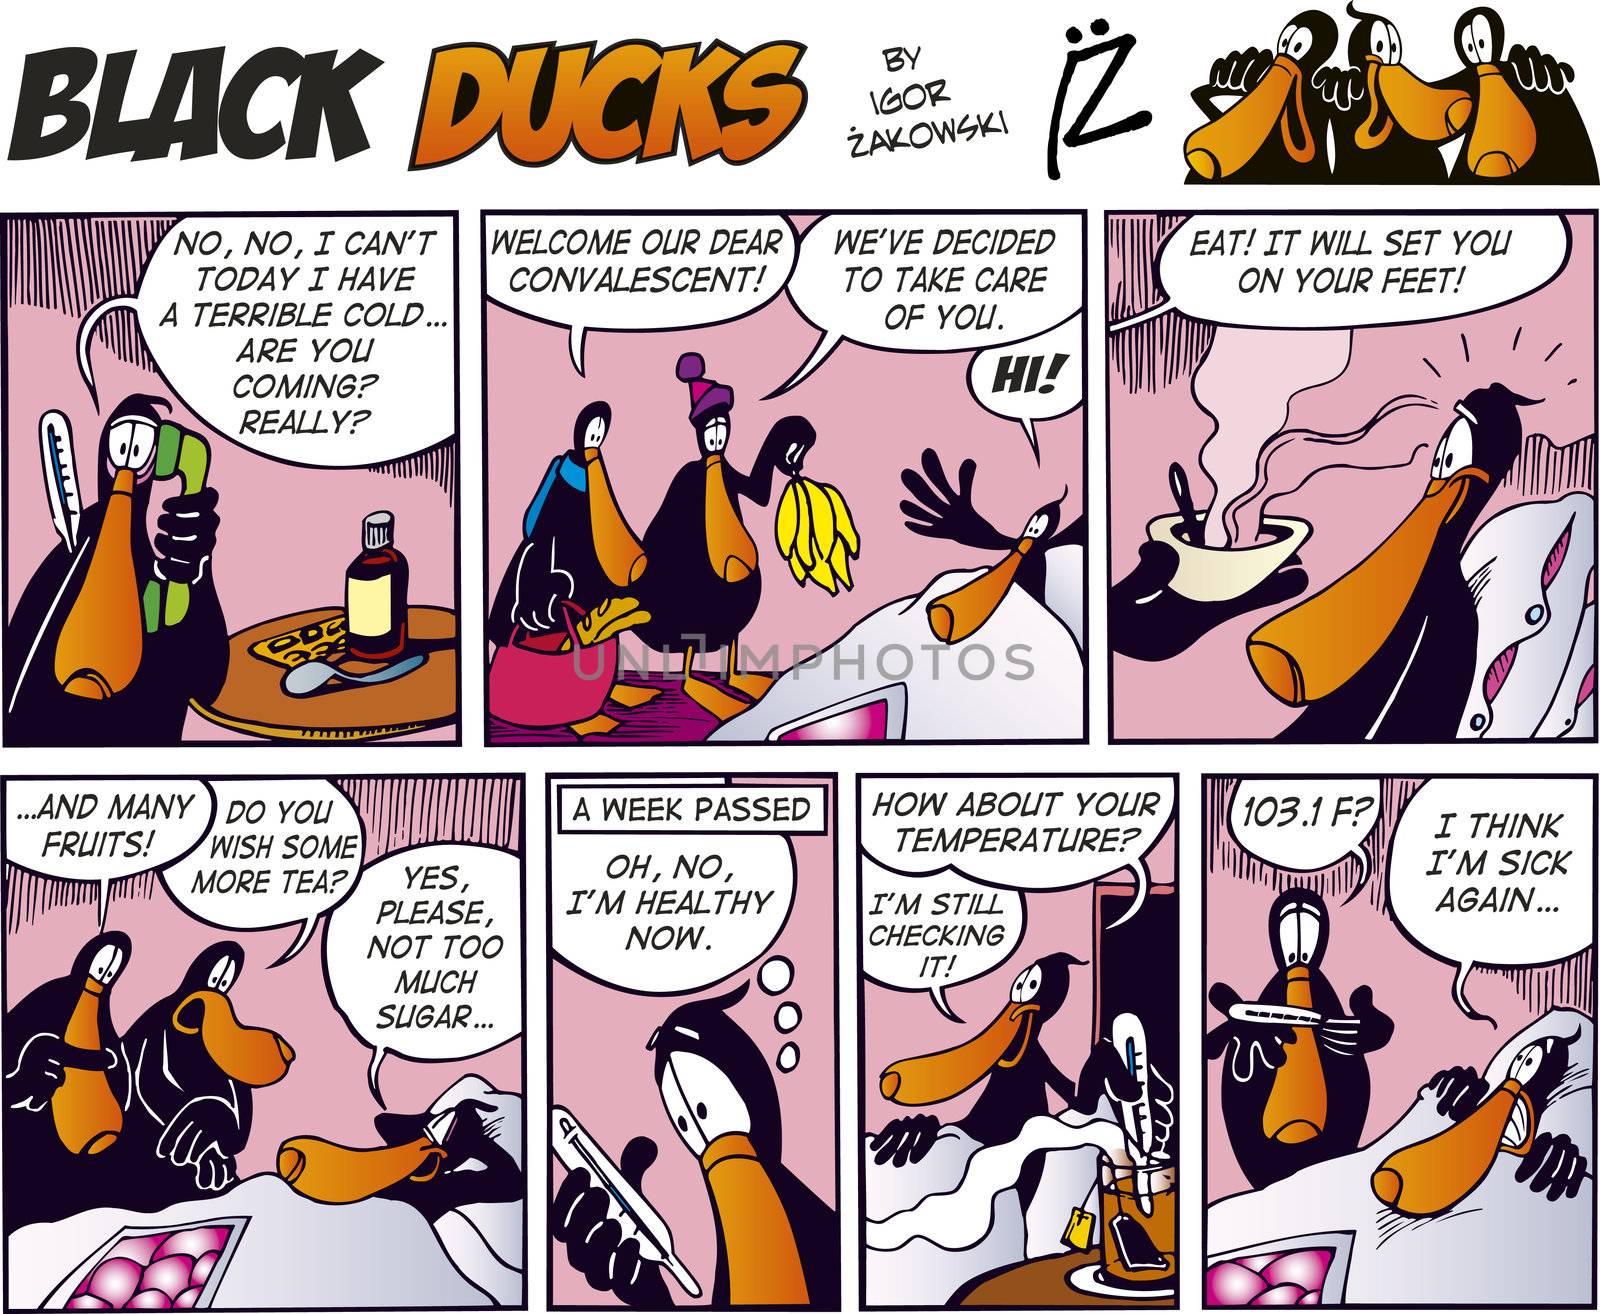 Black Ducks Comic Strip episode 19